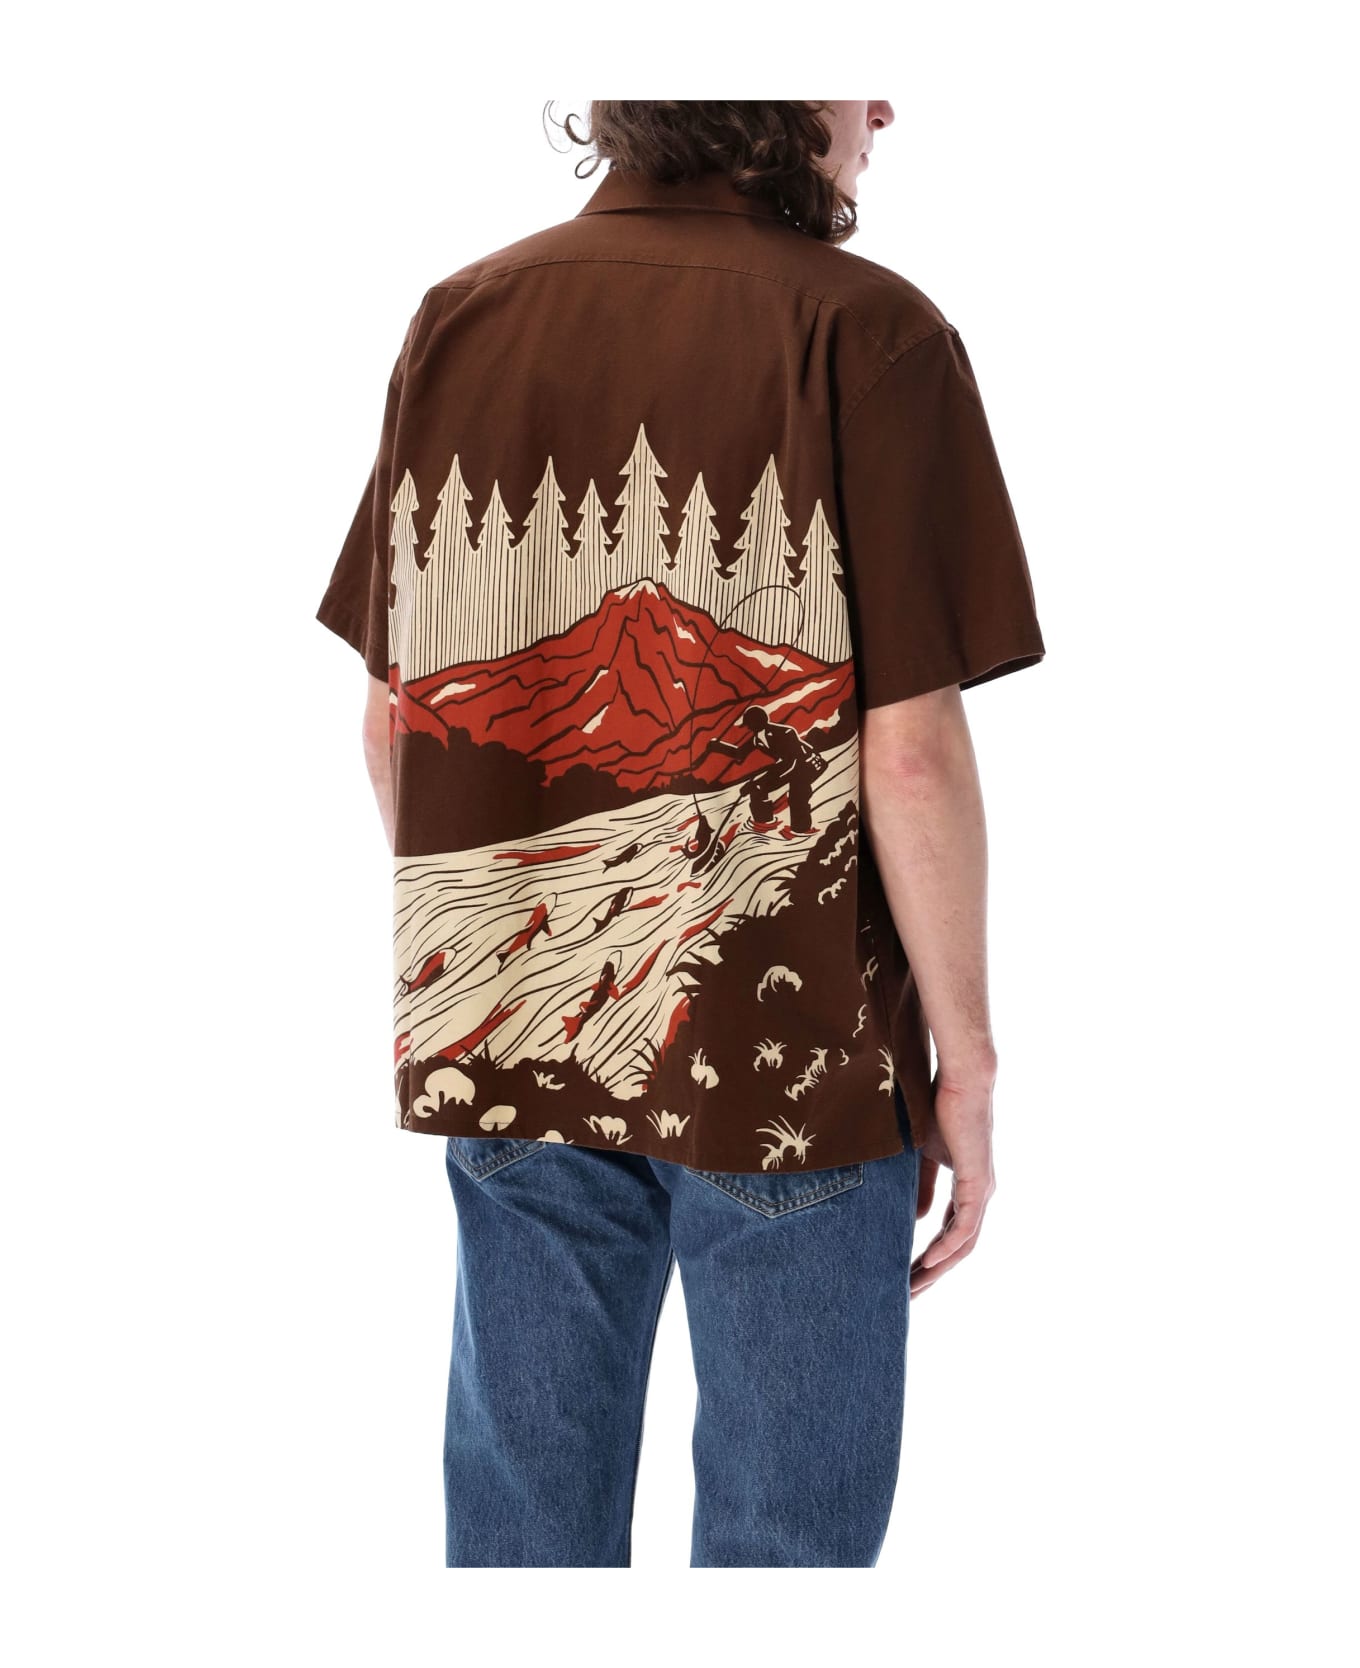 Filson Rustic Short Sleeve Camp Shirt - BROWN